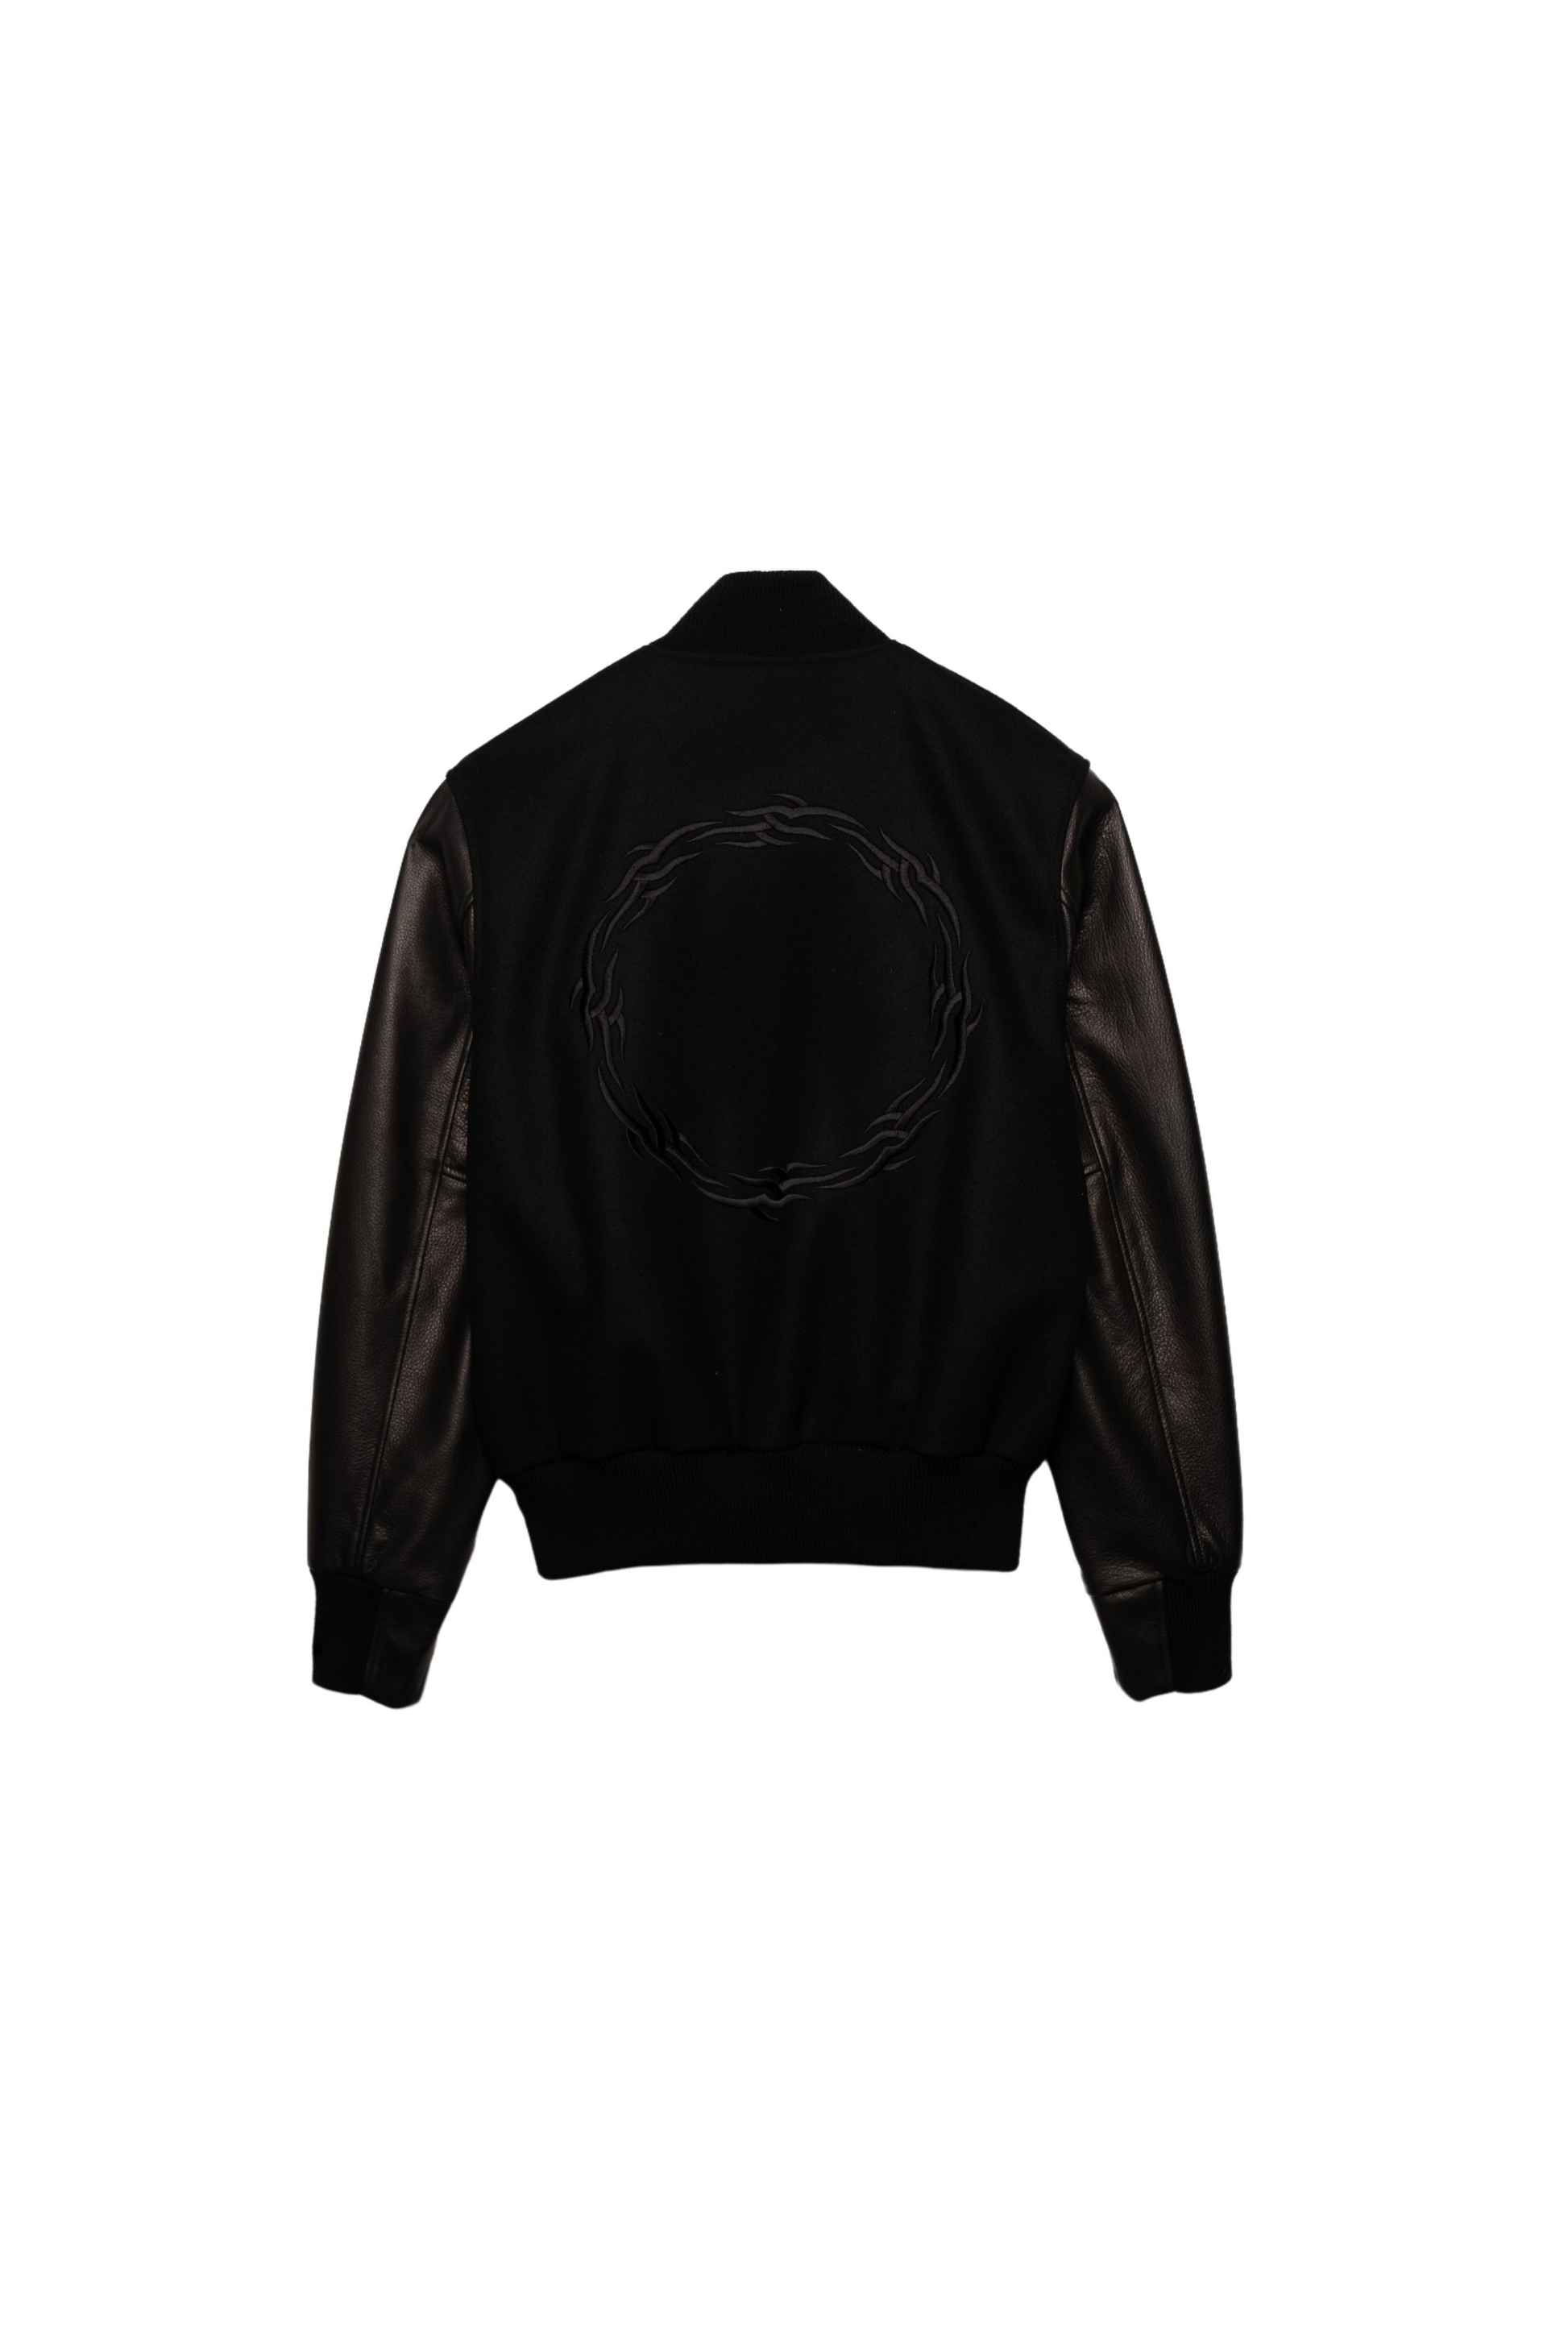 PURPLE BRAND - Men's Whool and Leather Varsity Jacket - Style No. P320 - Golden Bear Jacket - Back